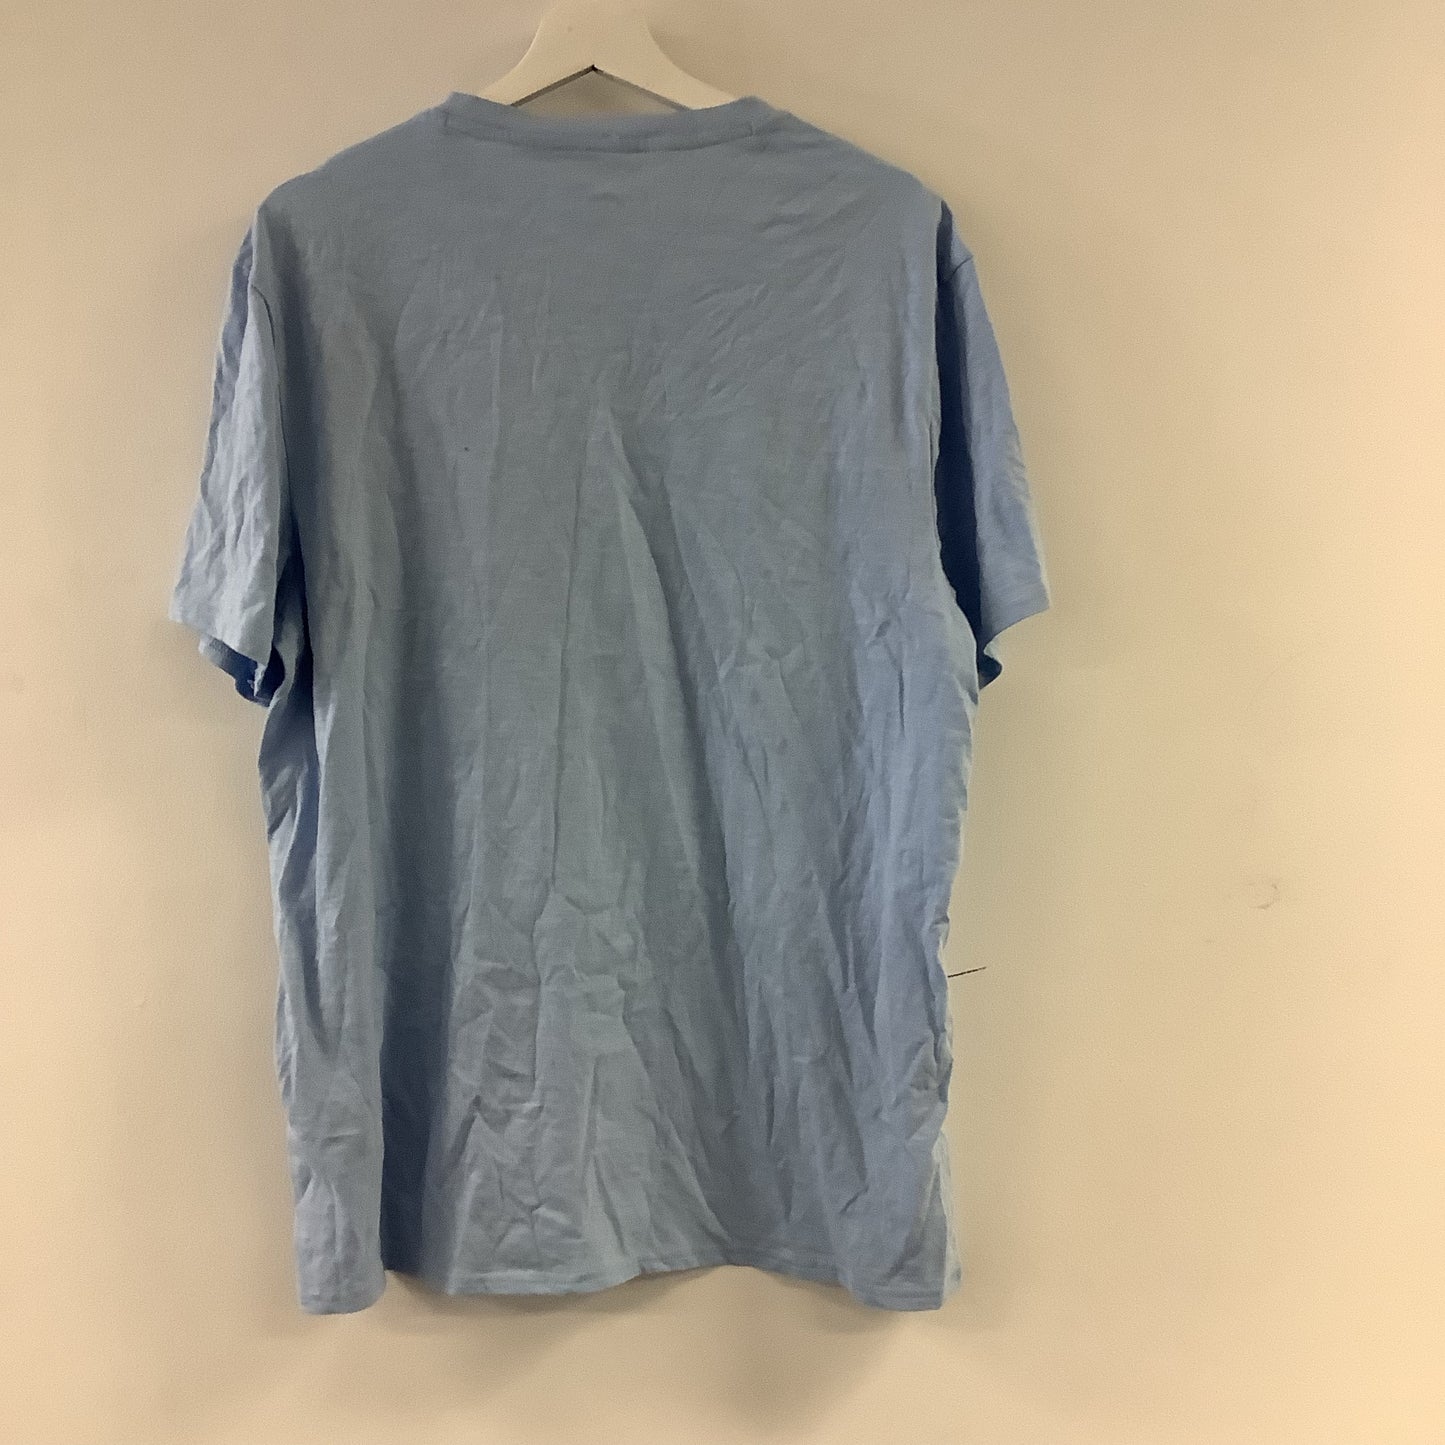 Calvin Klein Blue T-Shirt Size XL